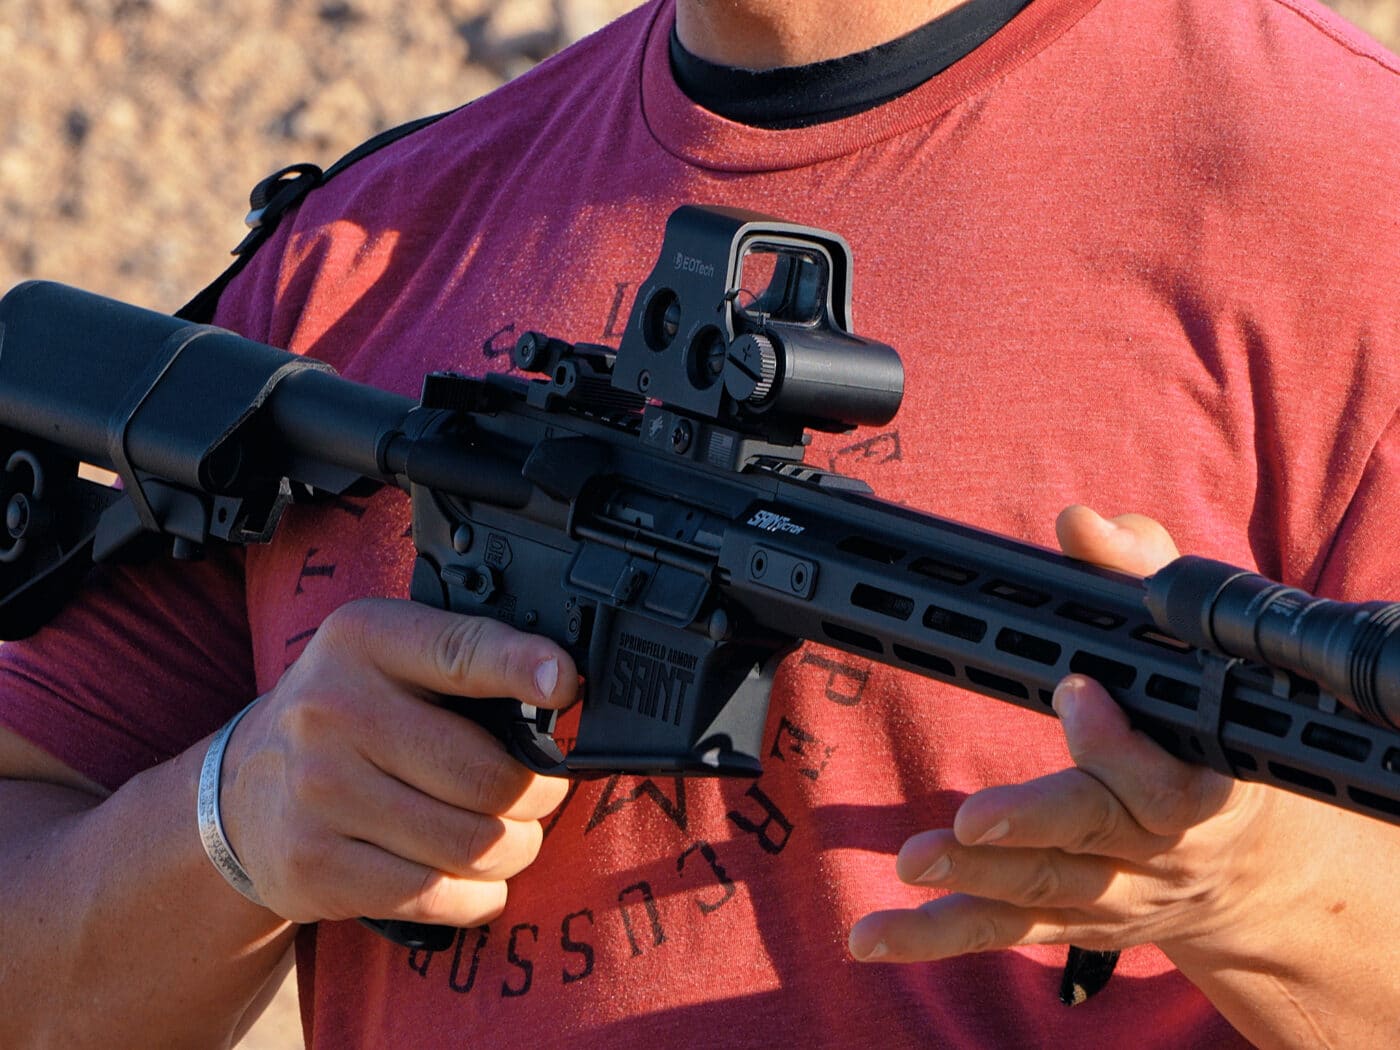 Reflex sight mounted on an AR-15 rifle